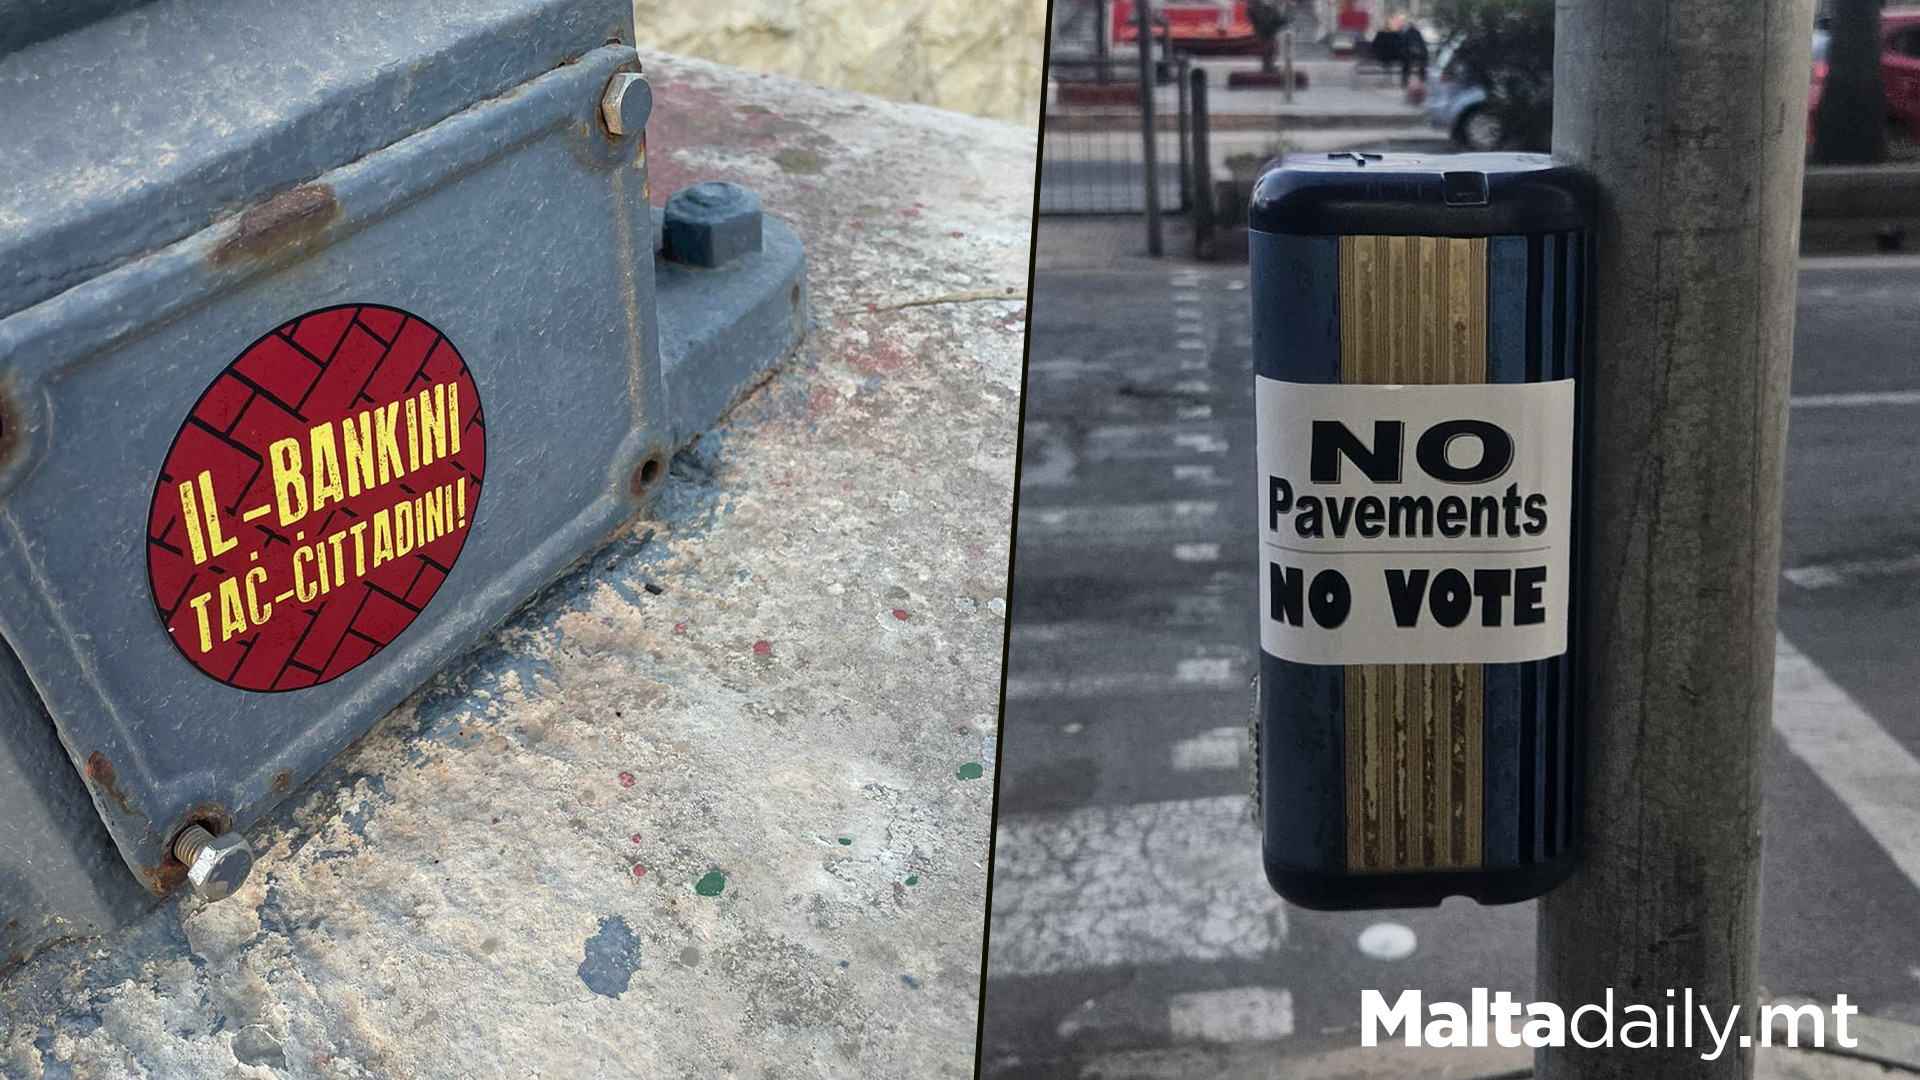 Pavements Belong To Citizens: Stickers Pop Up Around Malta